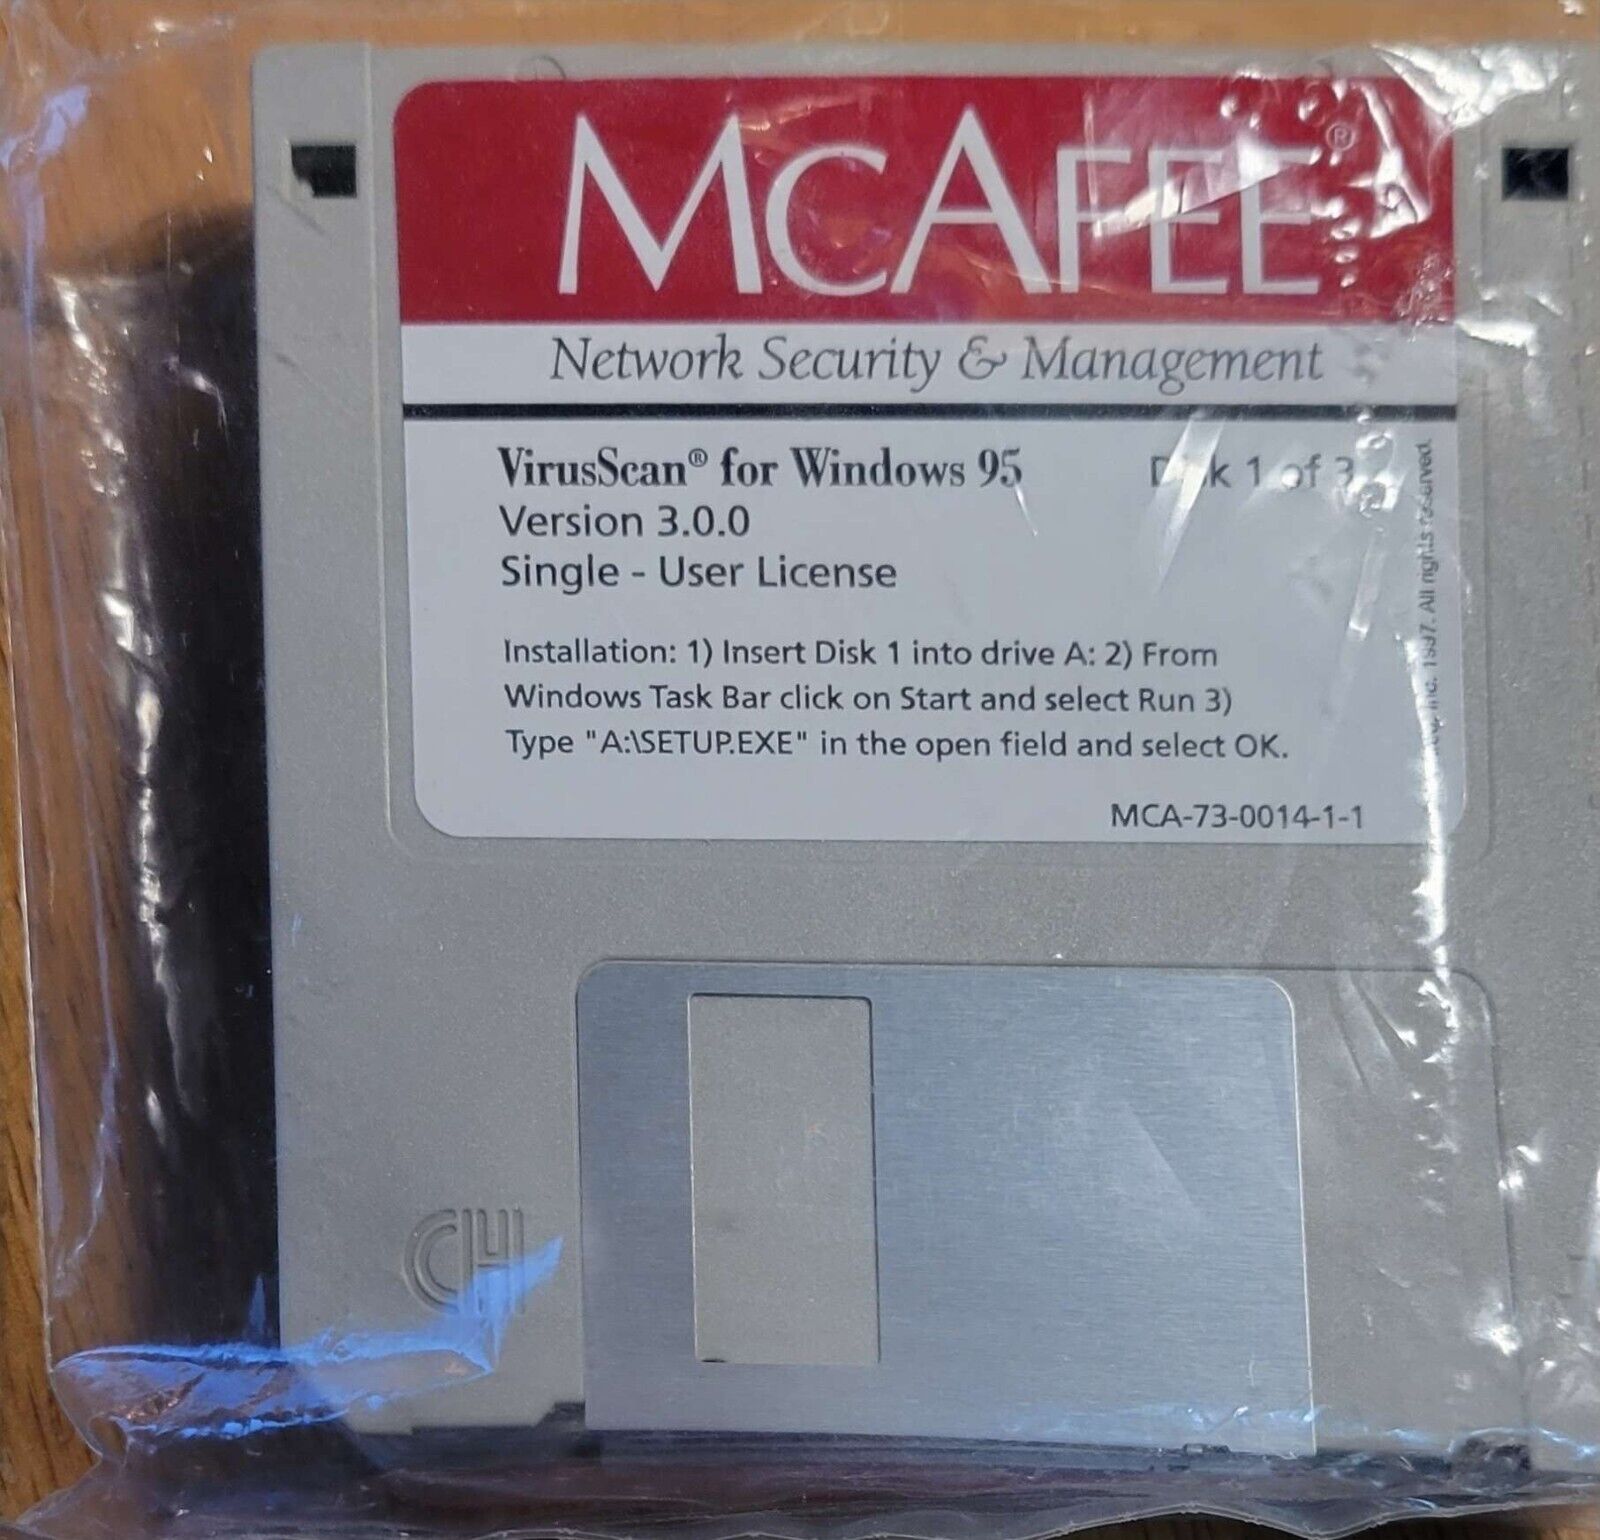 McAfee Network Security & Management - Windows 95 Version 3.0.0 - 6 Floppy Disks